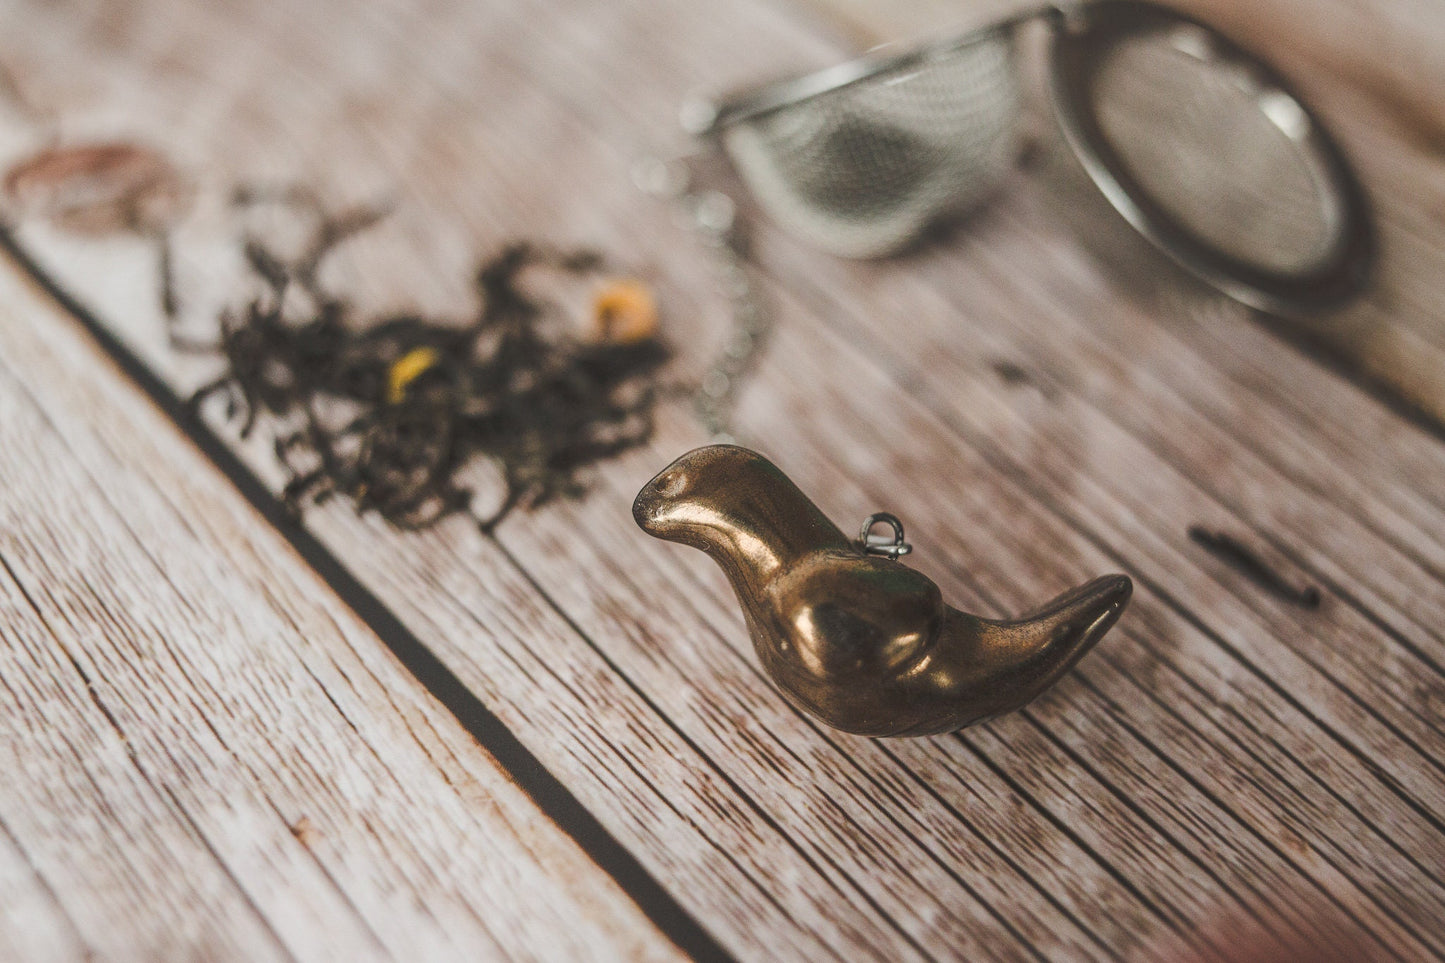 Loose leaf tea strainer with ceramic bird - Tea infuser with bronze bird - Herbal tea steeper - Christmas gift - Easter gift